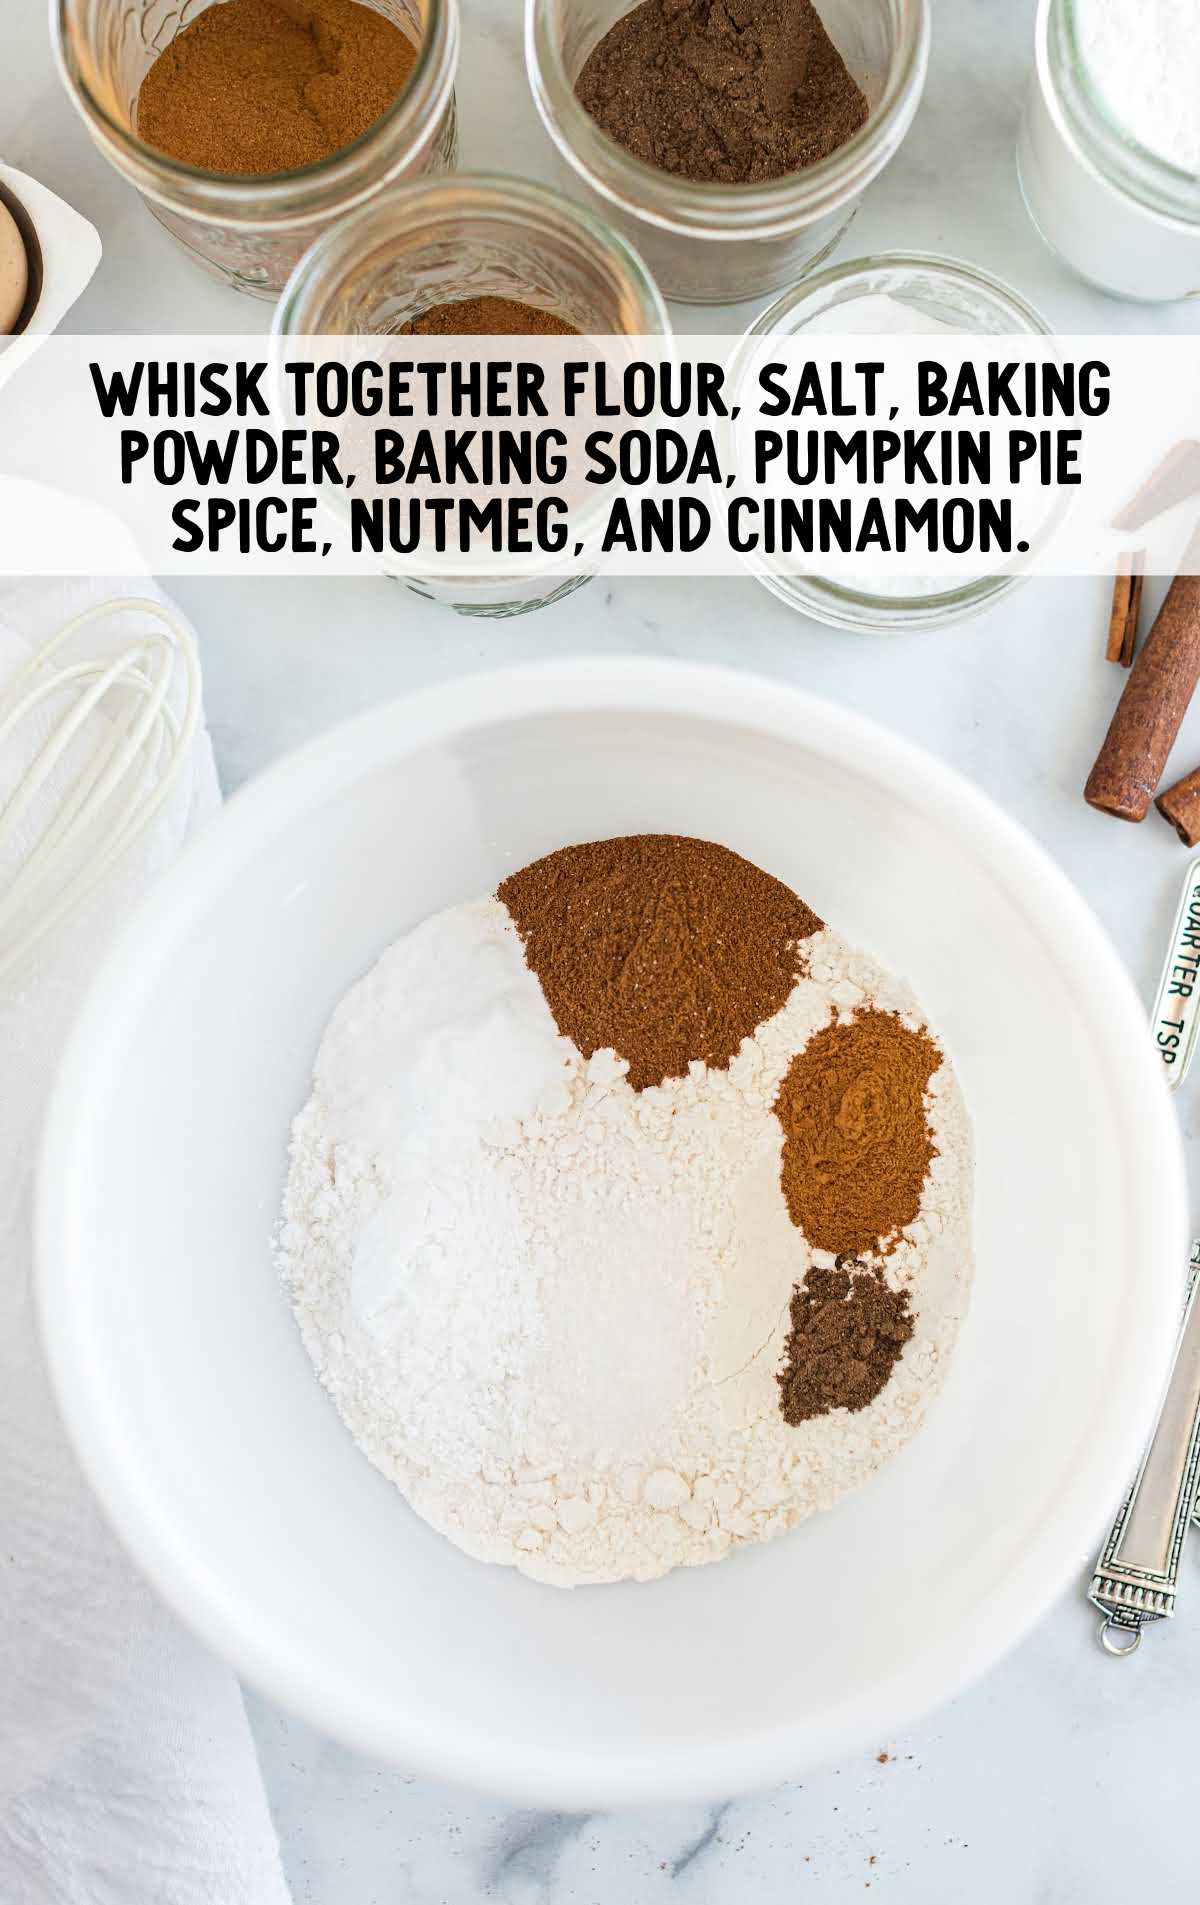 flour, salt, baking powder, baking soda, pumpkin pie spice, nutmeg, and cinnamon whisked together